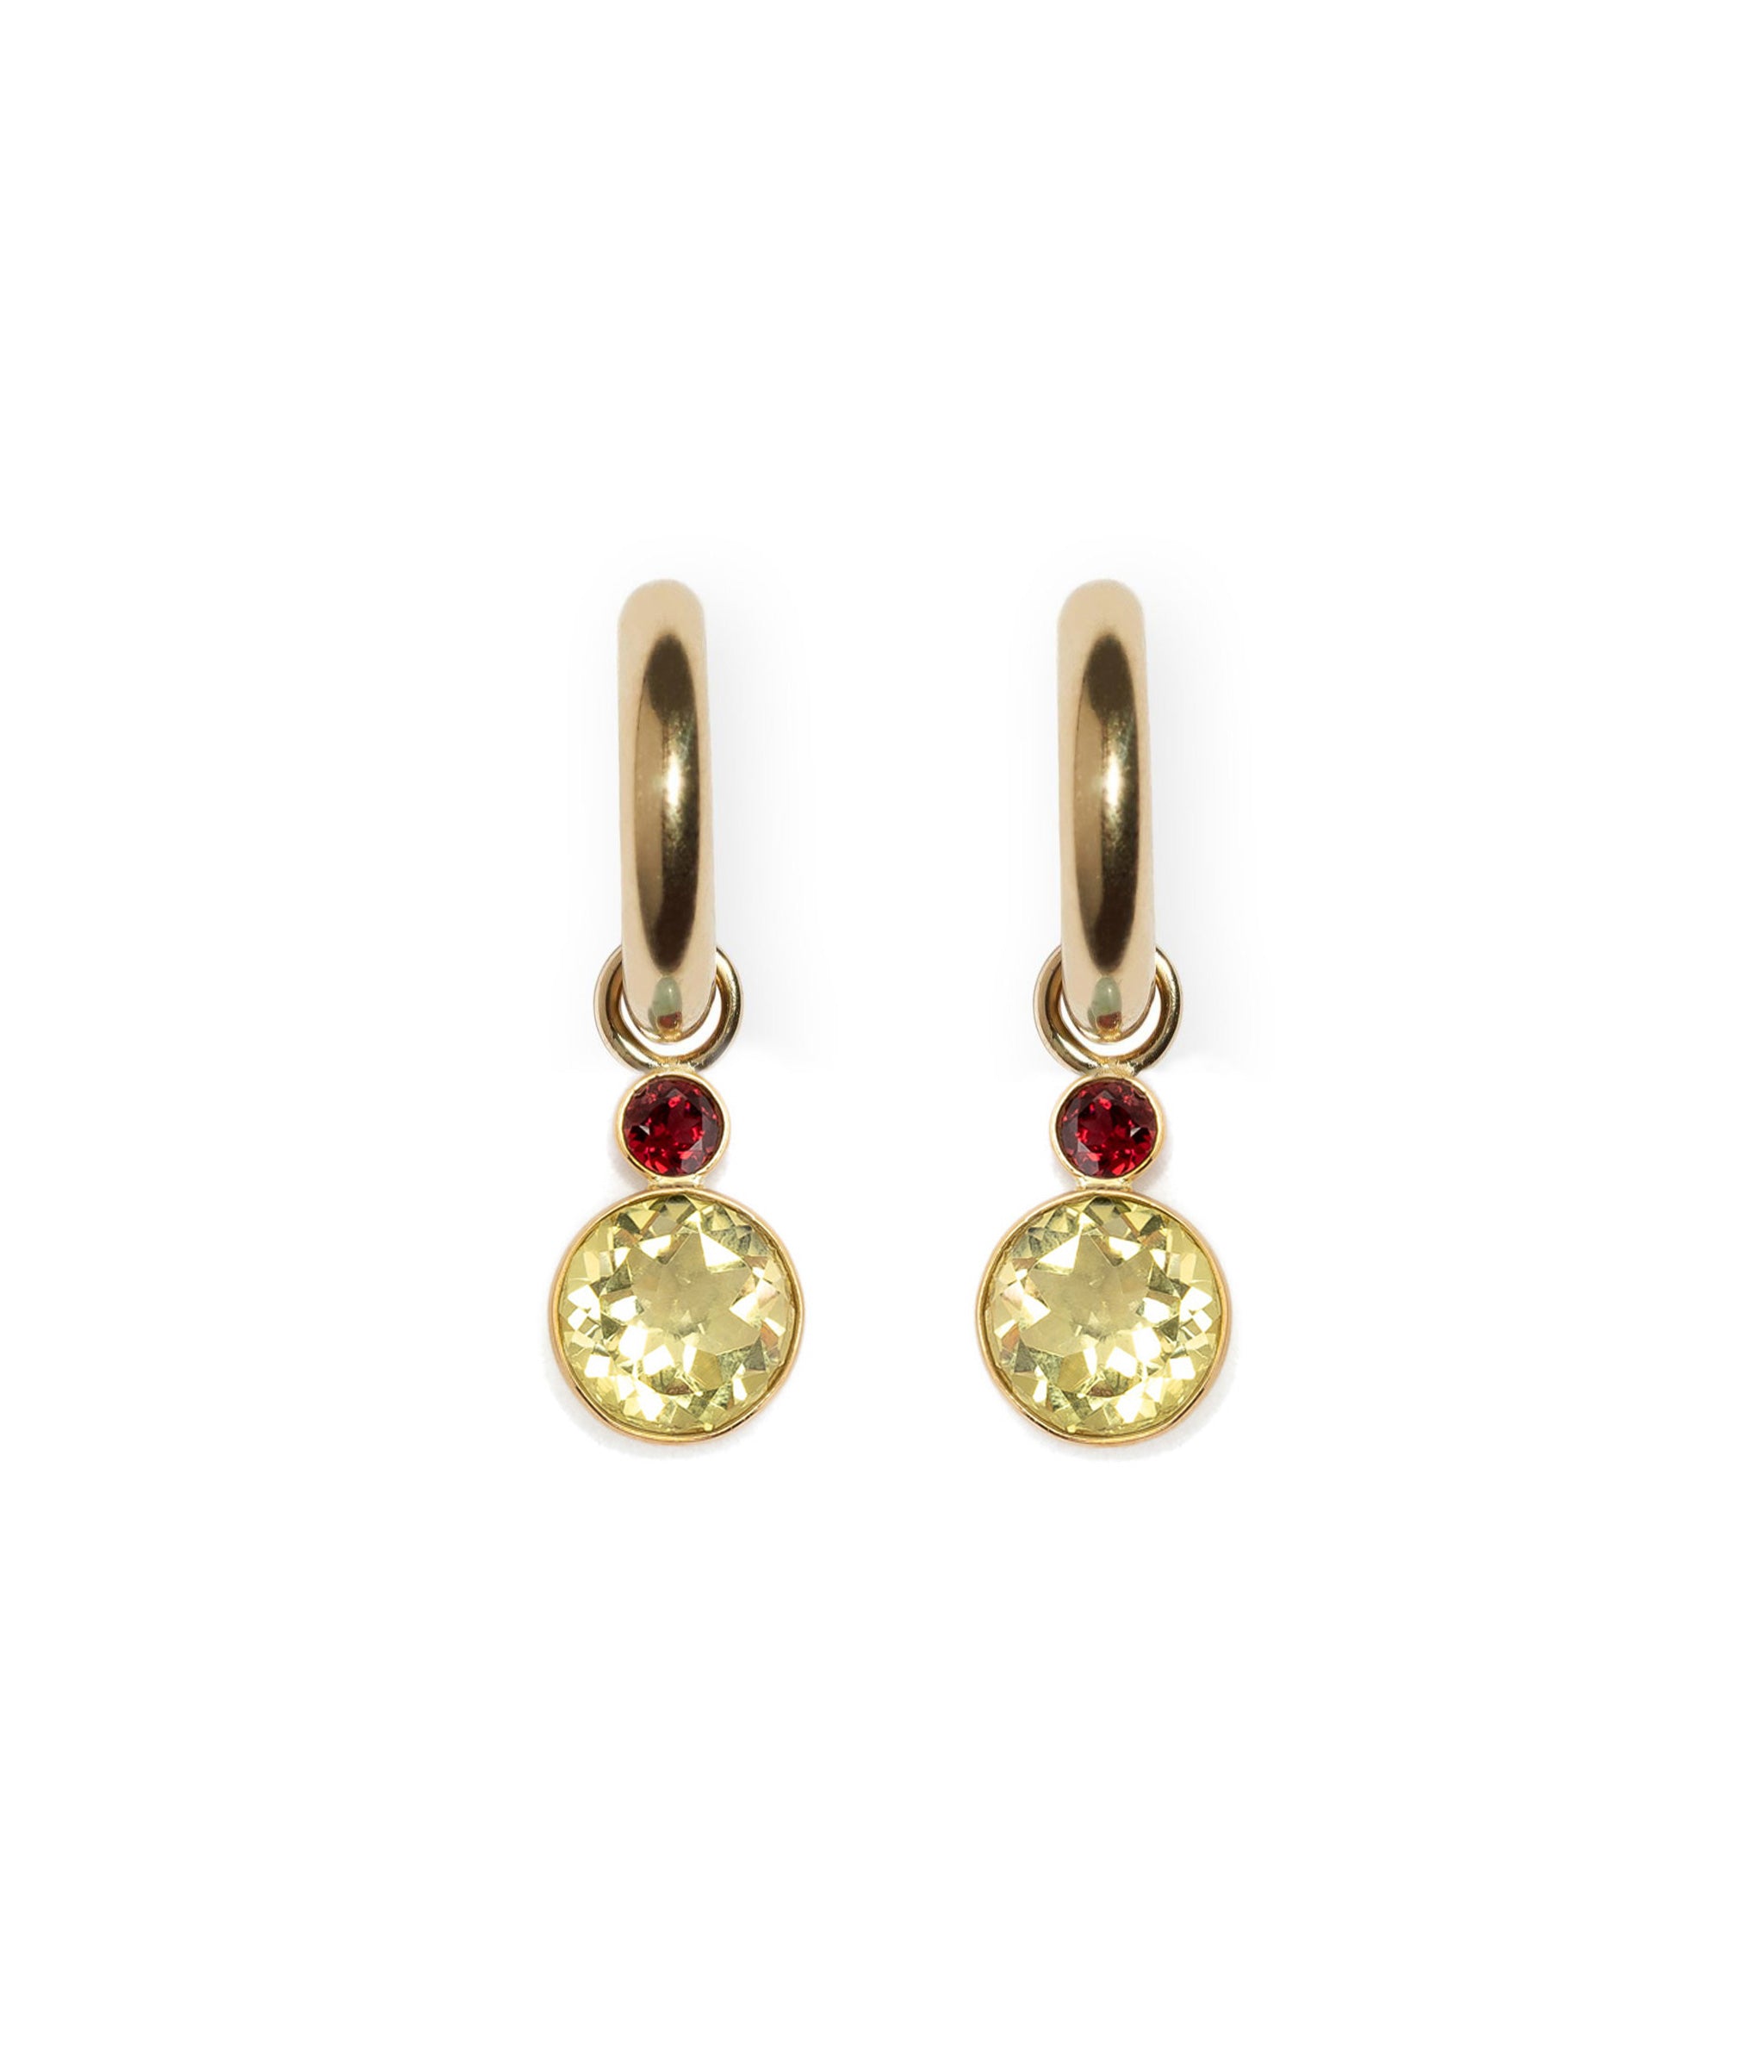 Fine Gold Mood Hoops with Garnet and Lemon Quartz 14k Earring Charms